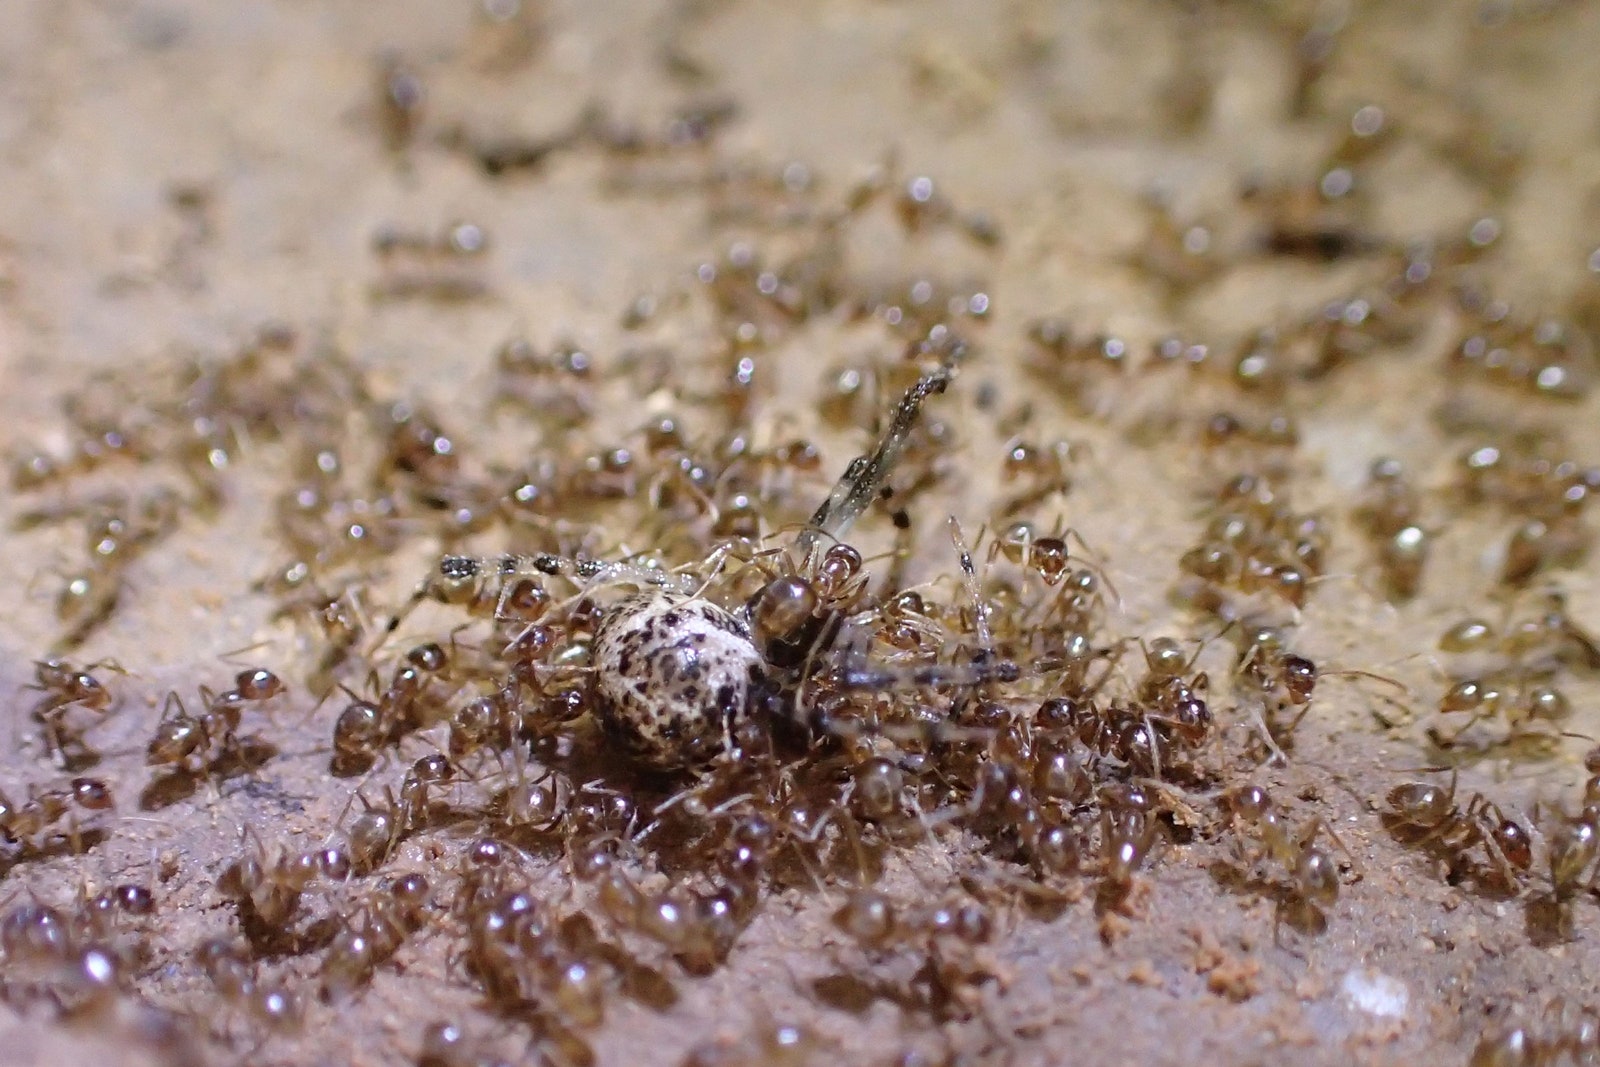 ants scrambling on cobweb spider